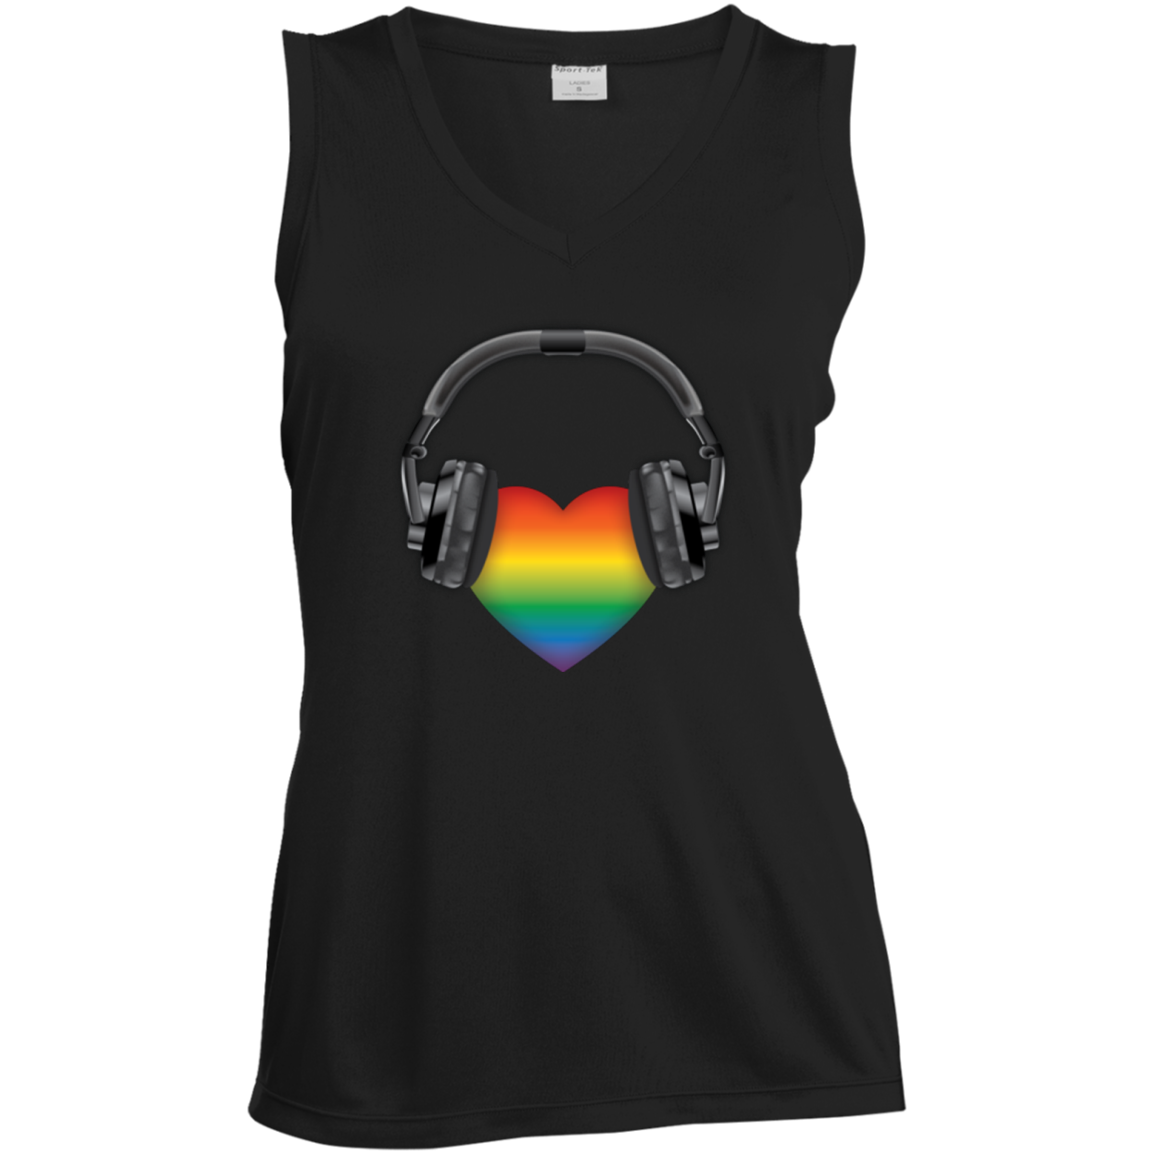 Listen to Your Heart LGBT Pride black sleeveless tshirt for women